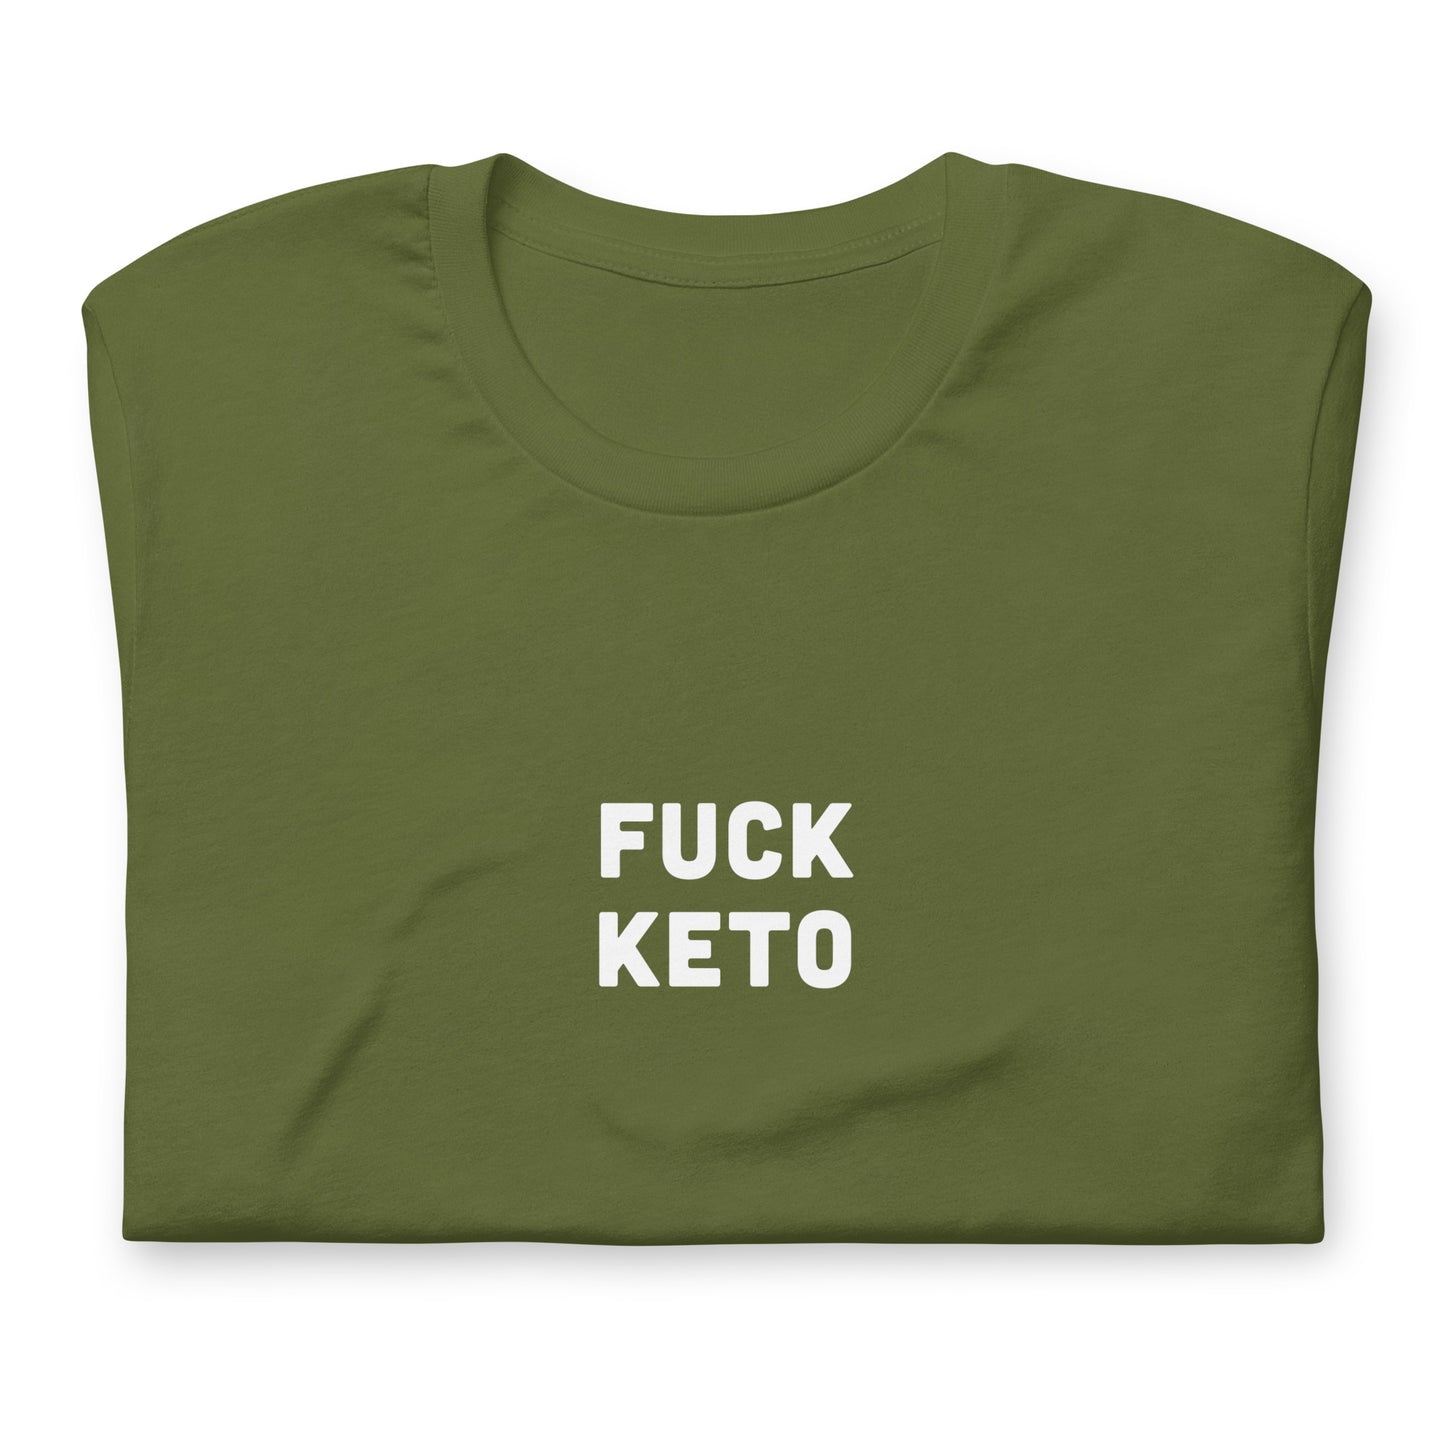 Fuck Keto T-Shirt Size M Color Navy